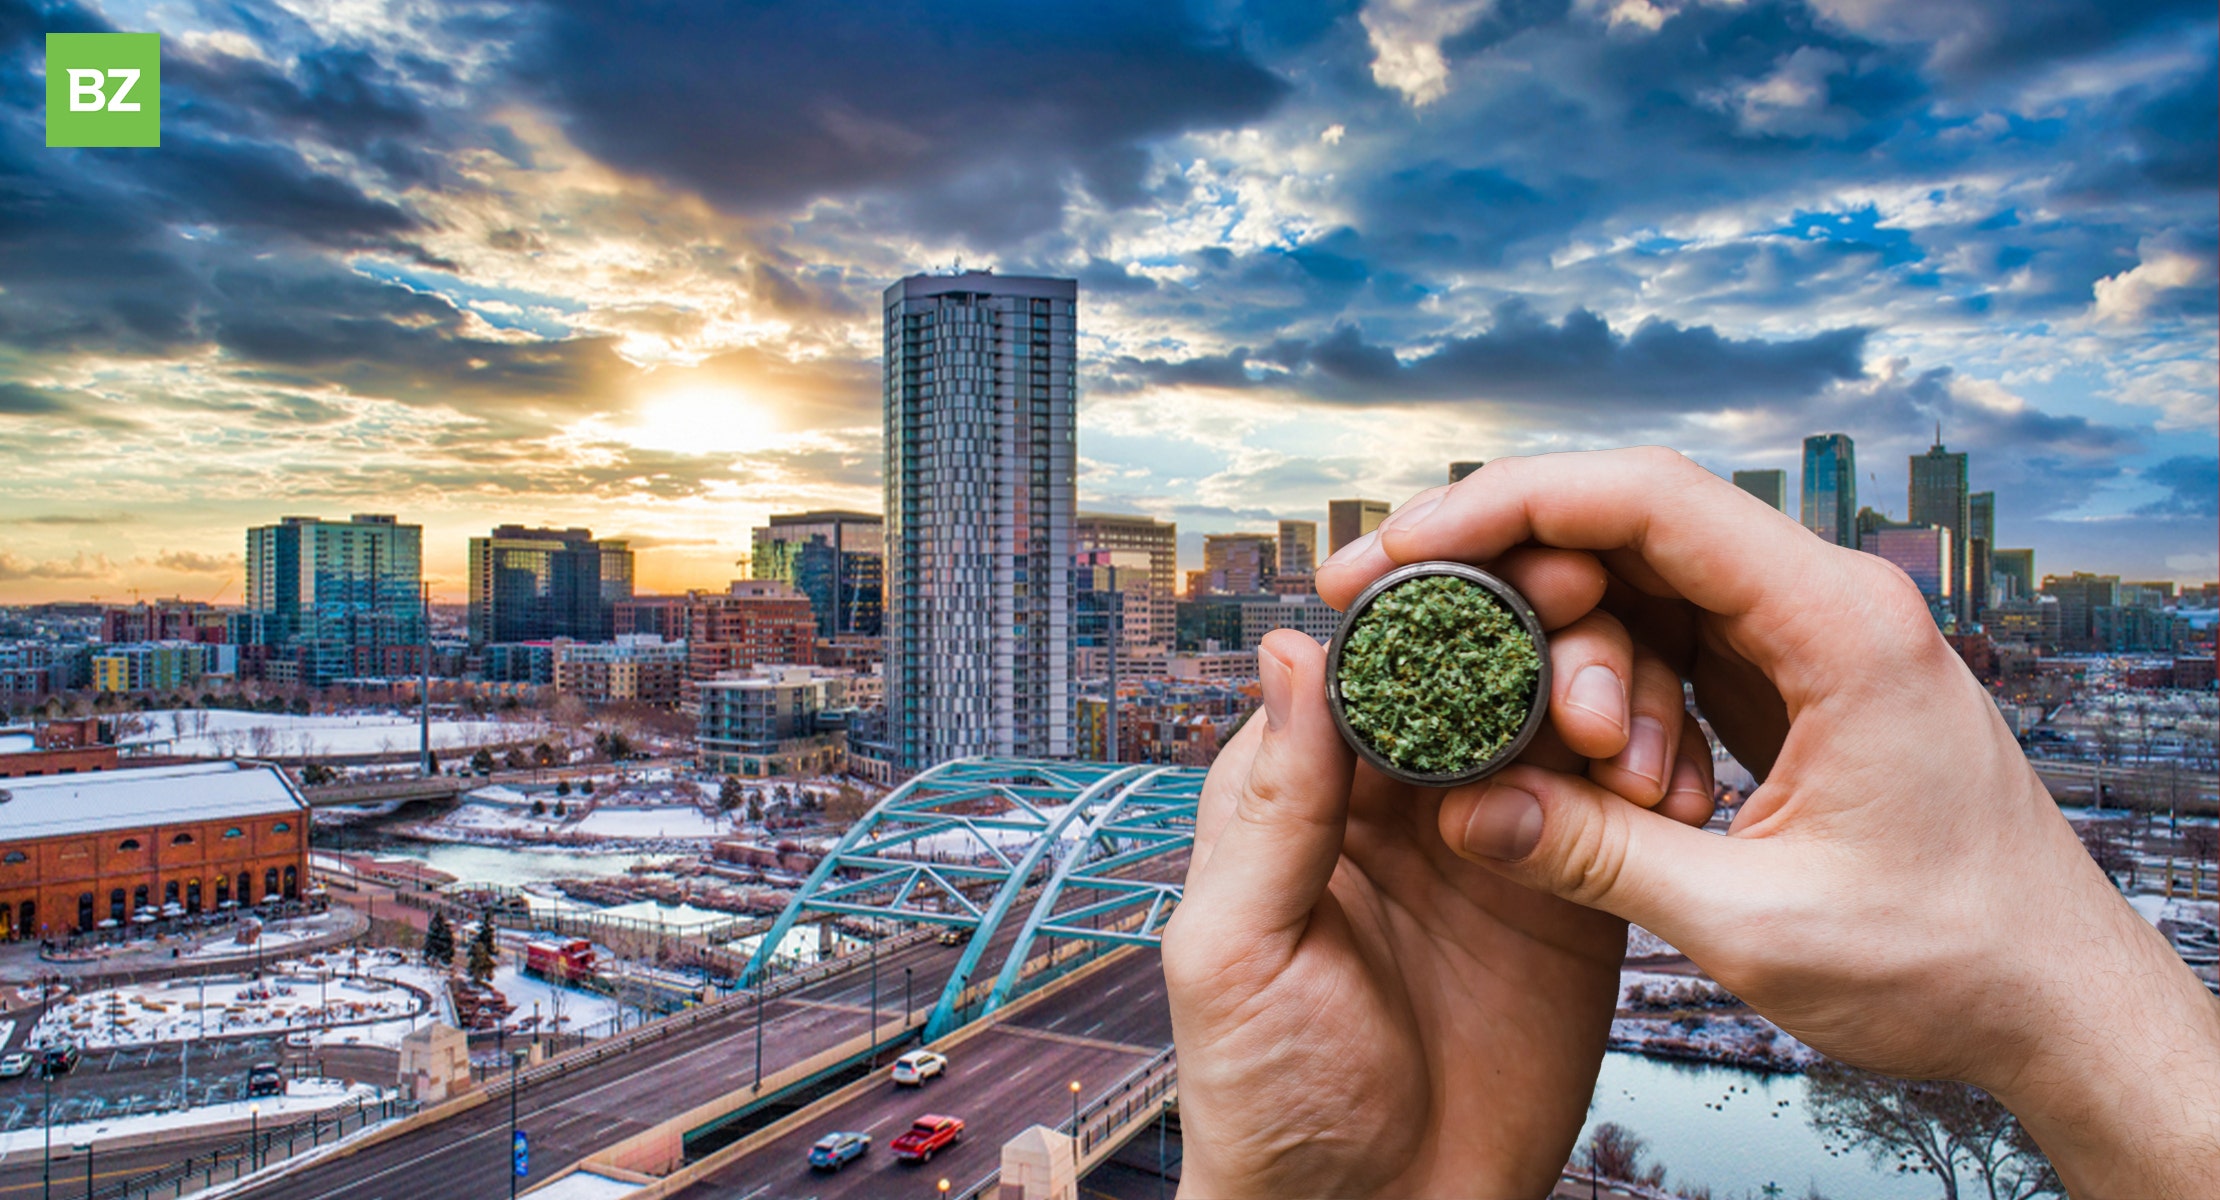 Schwazze Opening Star Buds Cannabis Dispensary In Glendale, Colorado